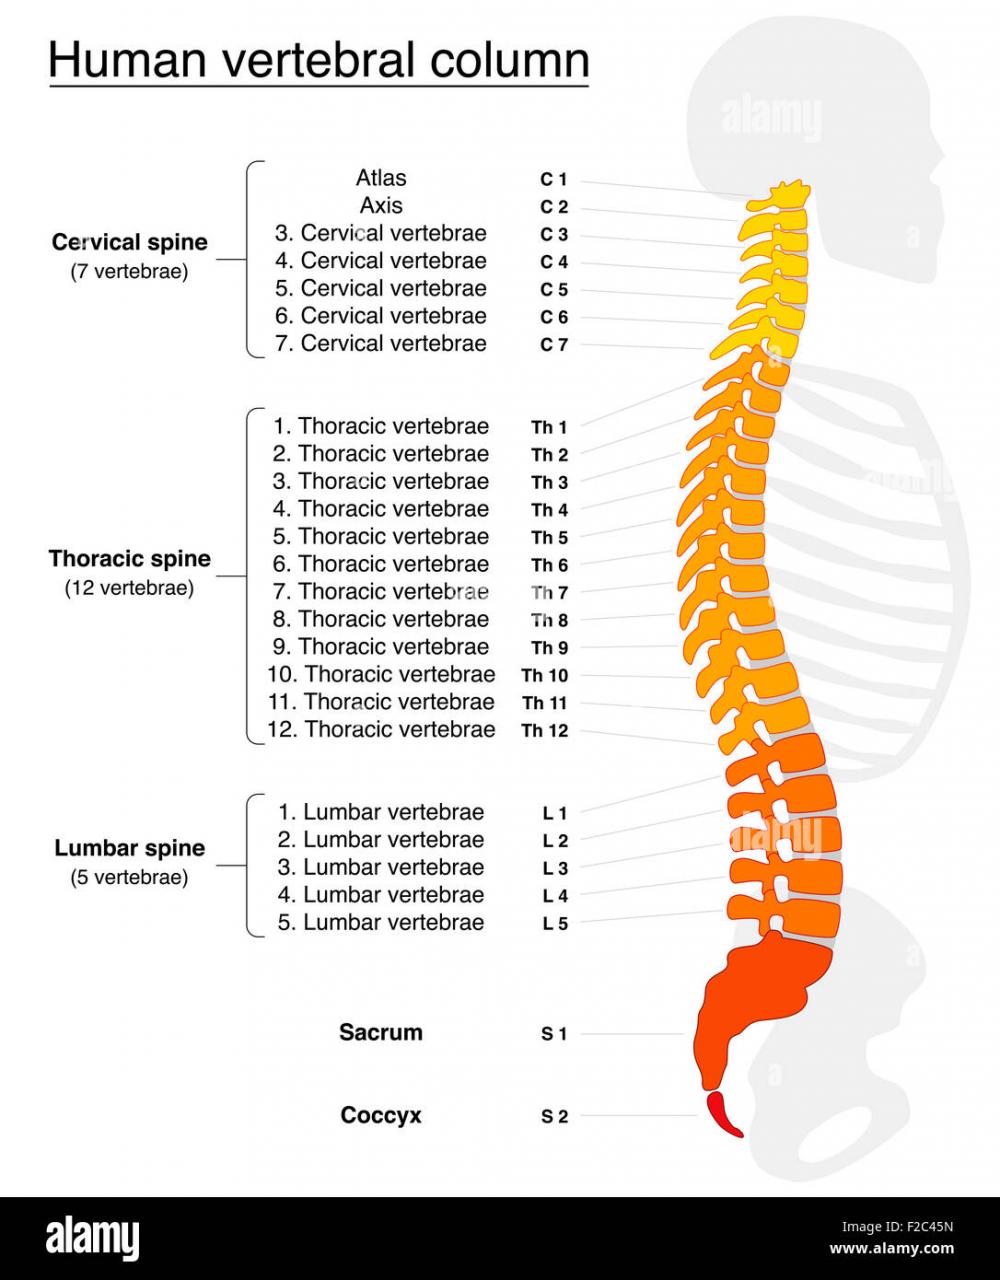 Illustration of vertebral column with named and numbered vertebrae